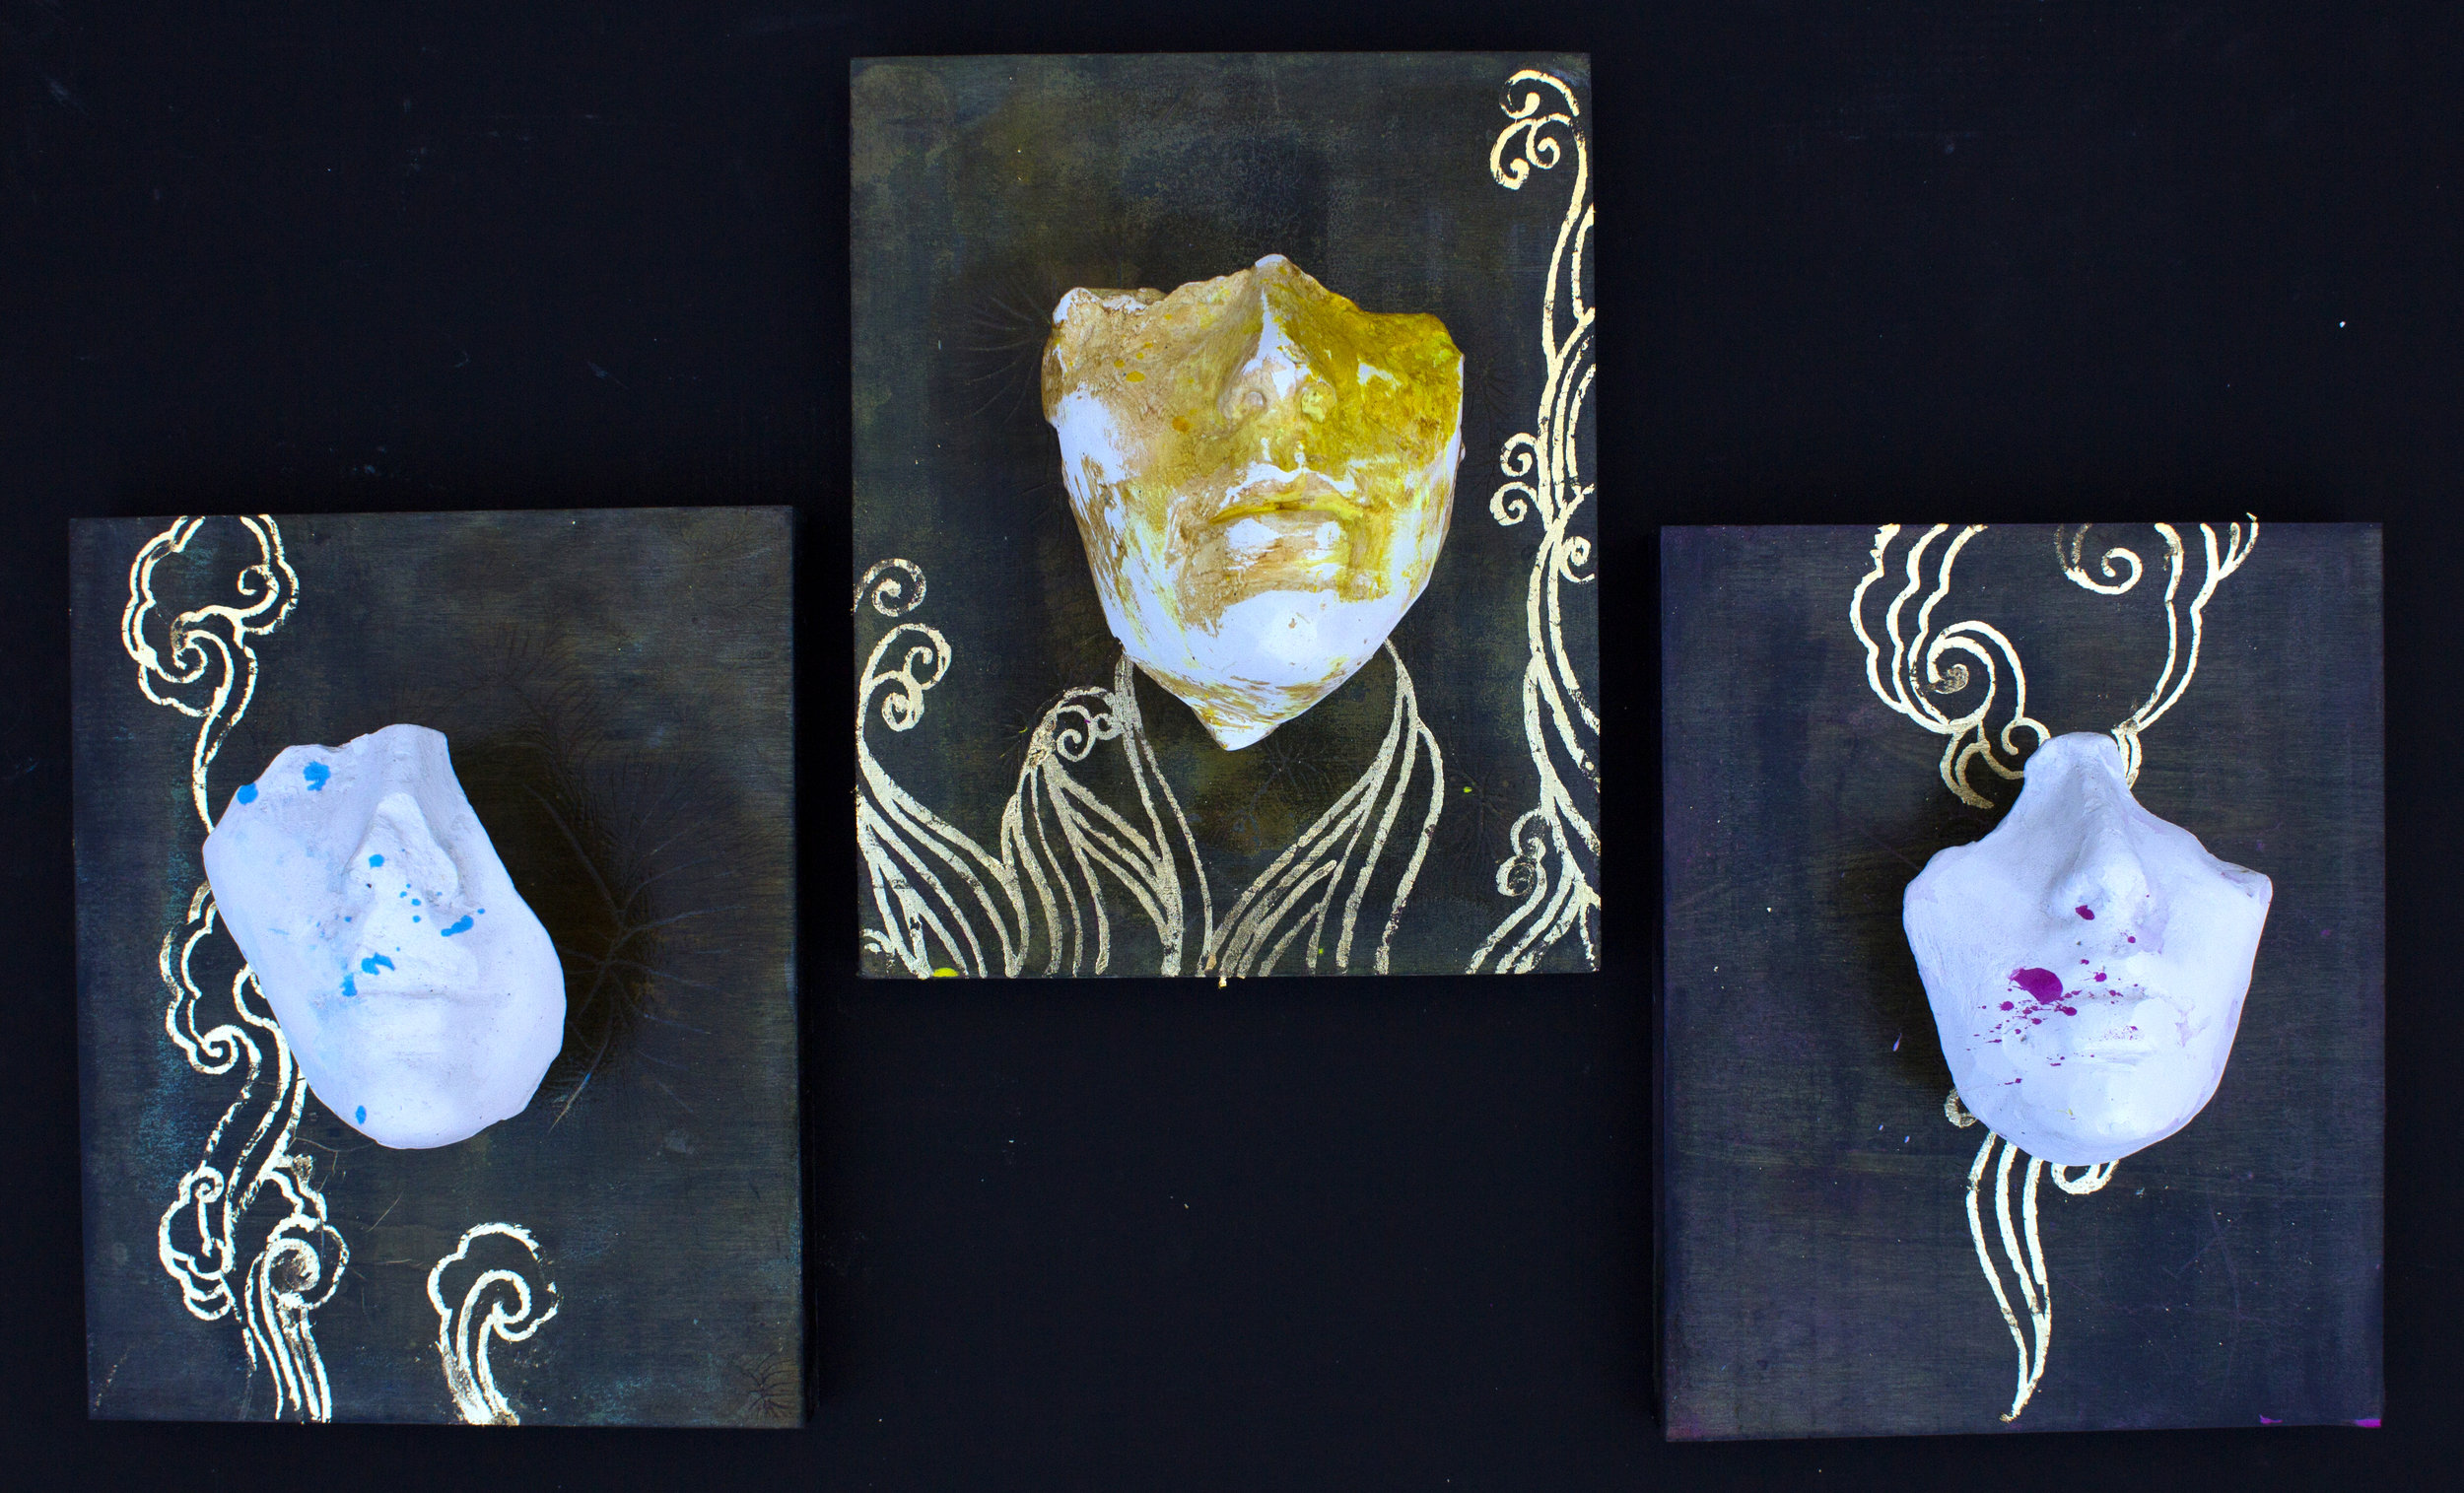   Three Graces   plaster of paris/ gold leaf   3 pieces 8”x10”  2019 